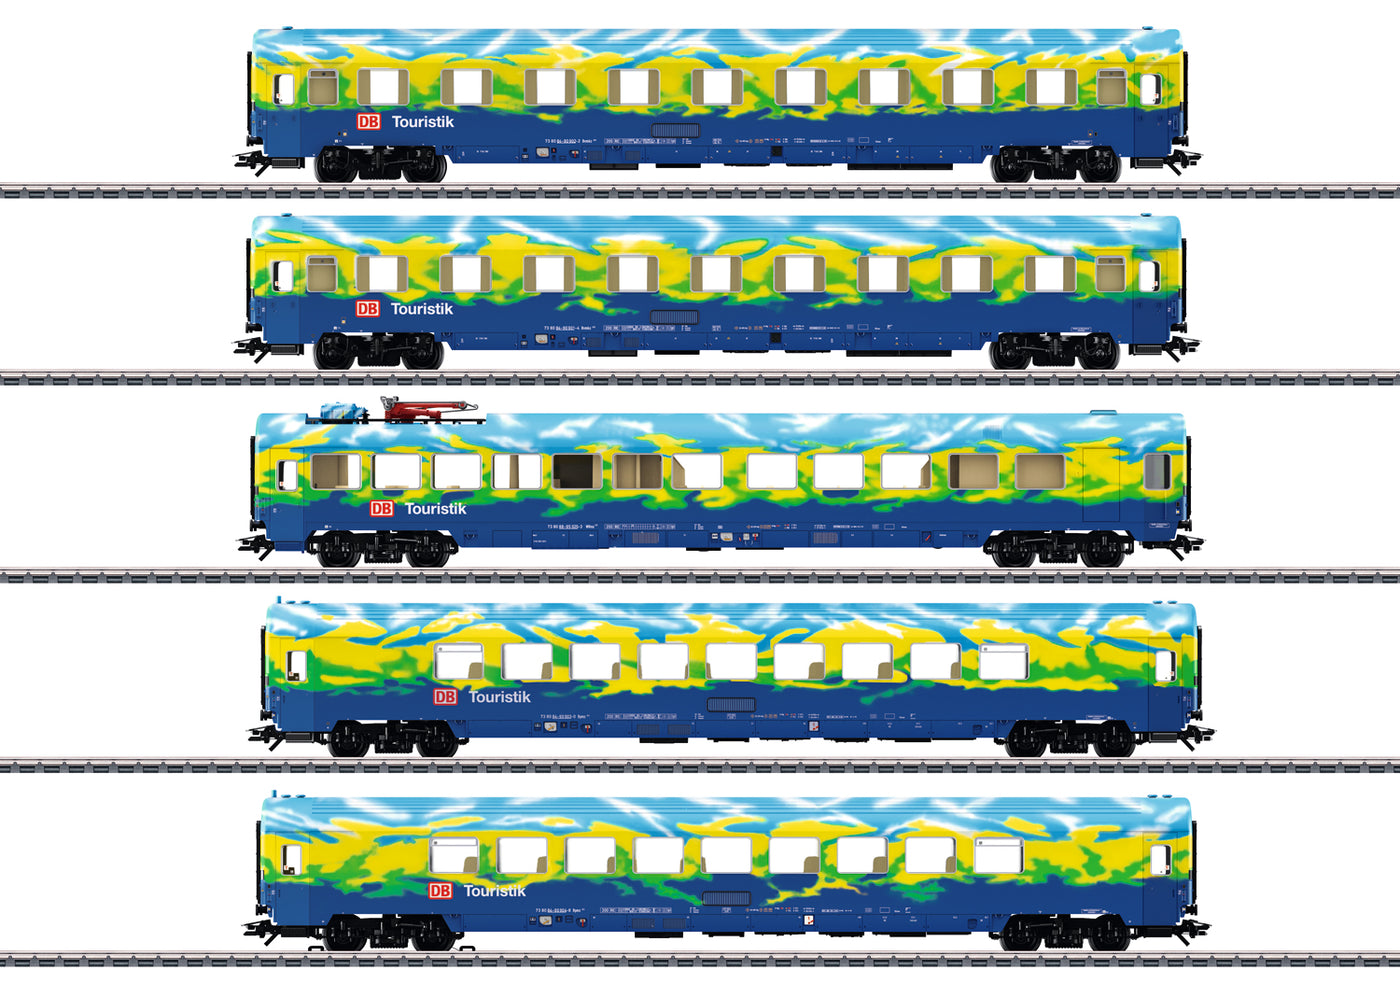 Marklin 43878 - Tourist train passenger carriage set